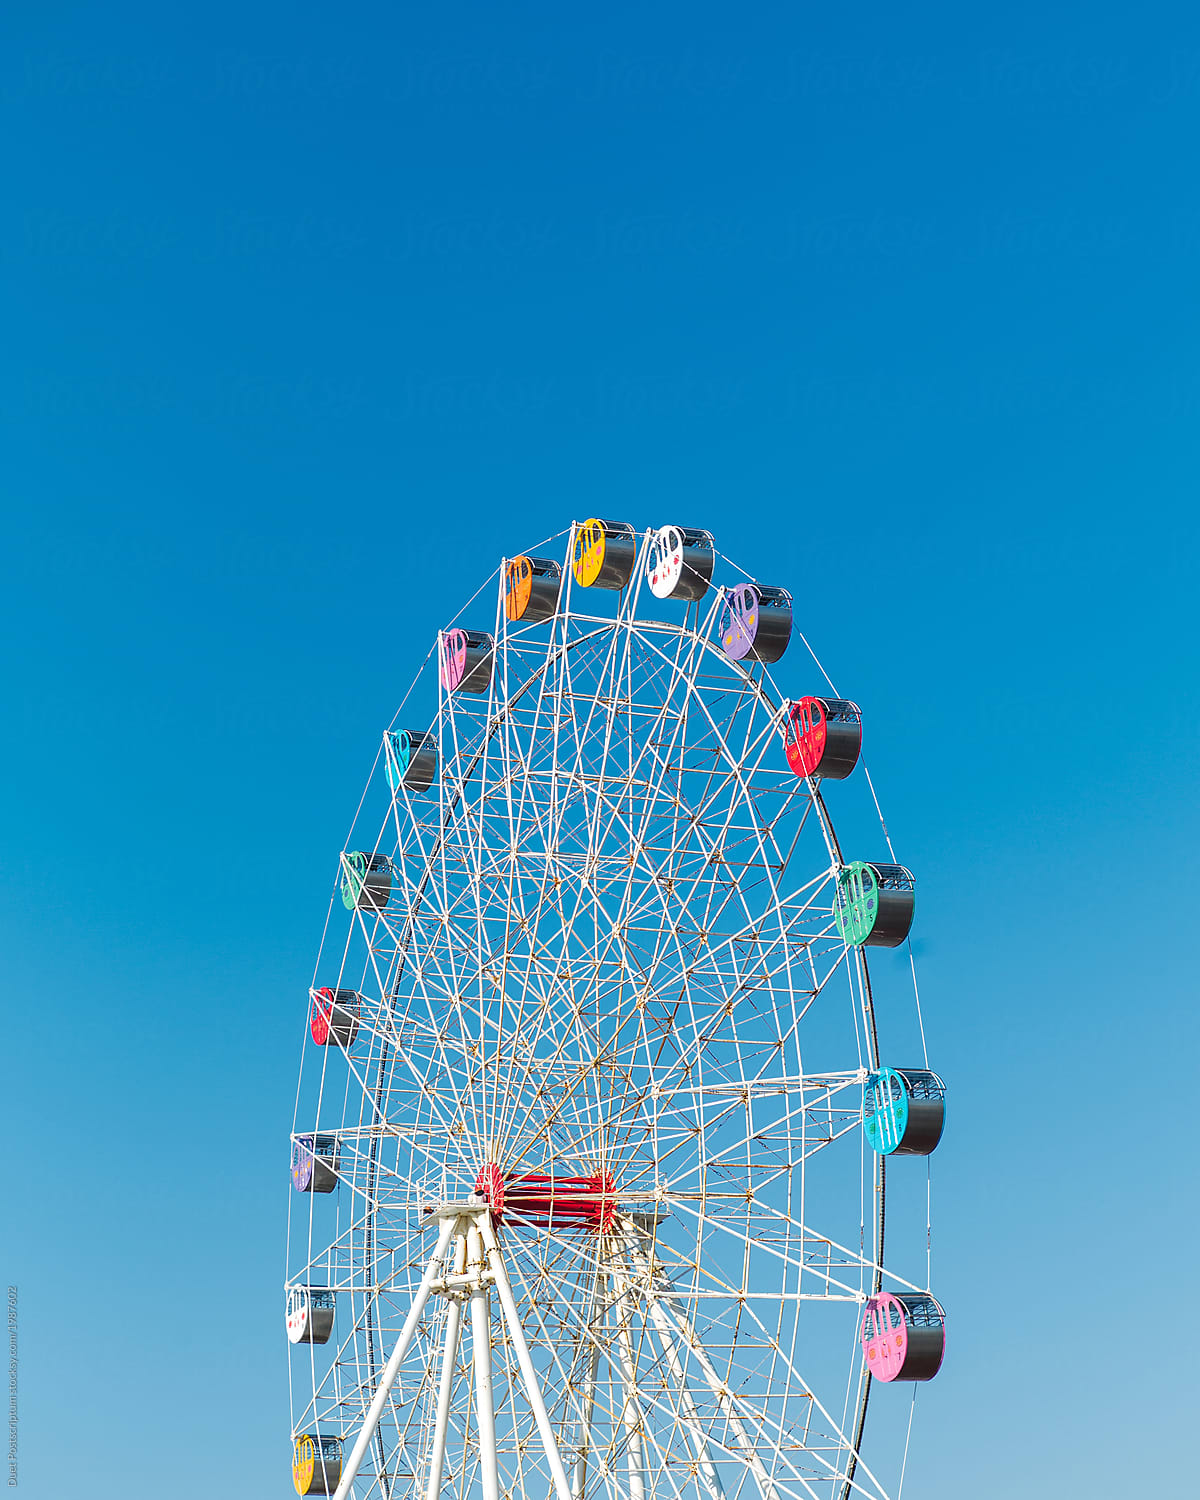 Colorful Ferris wheel on blue sky